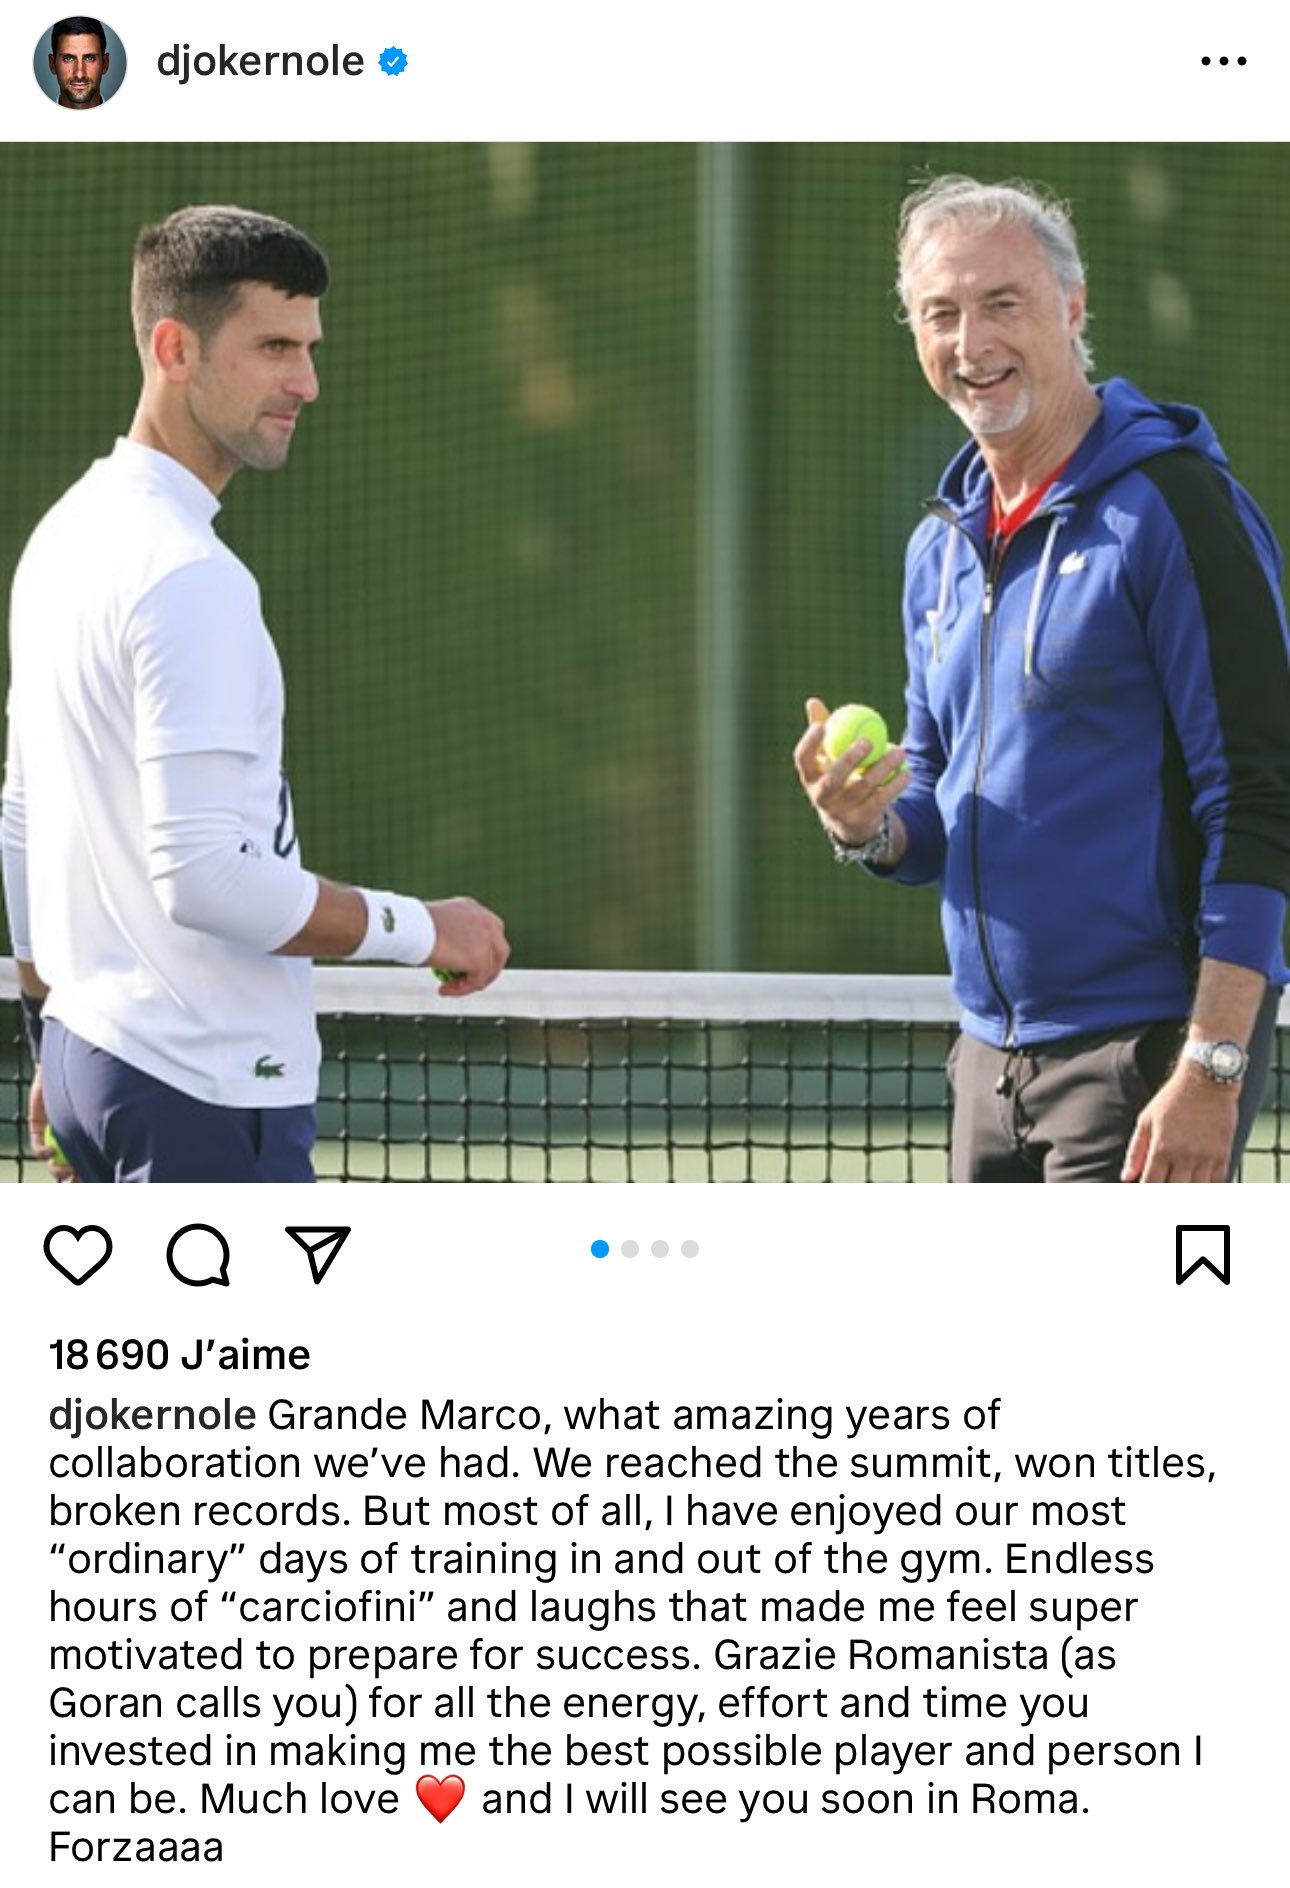 Novak Djokovic's Instagram post on April 30 about Marco Panichi. /@djokernole